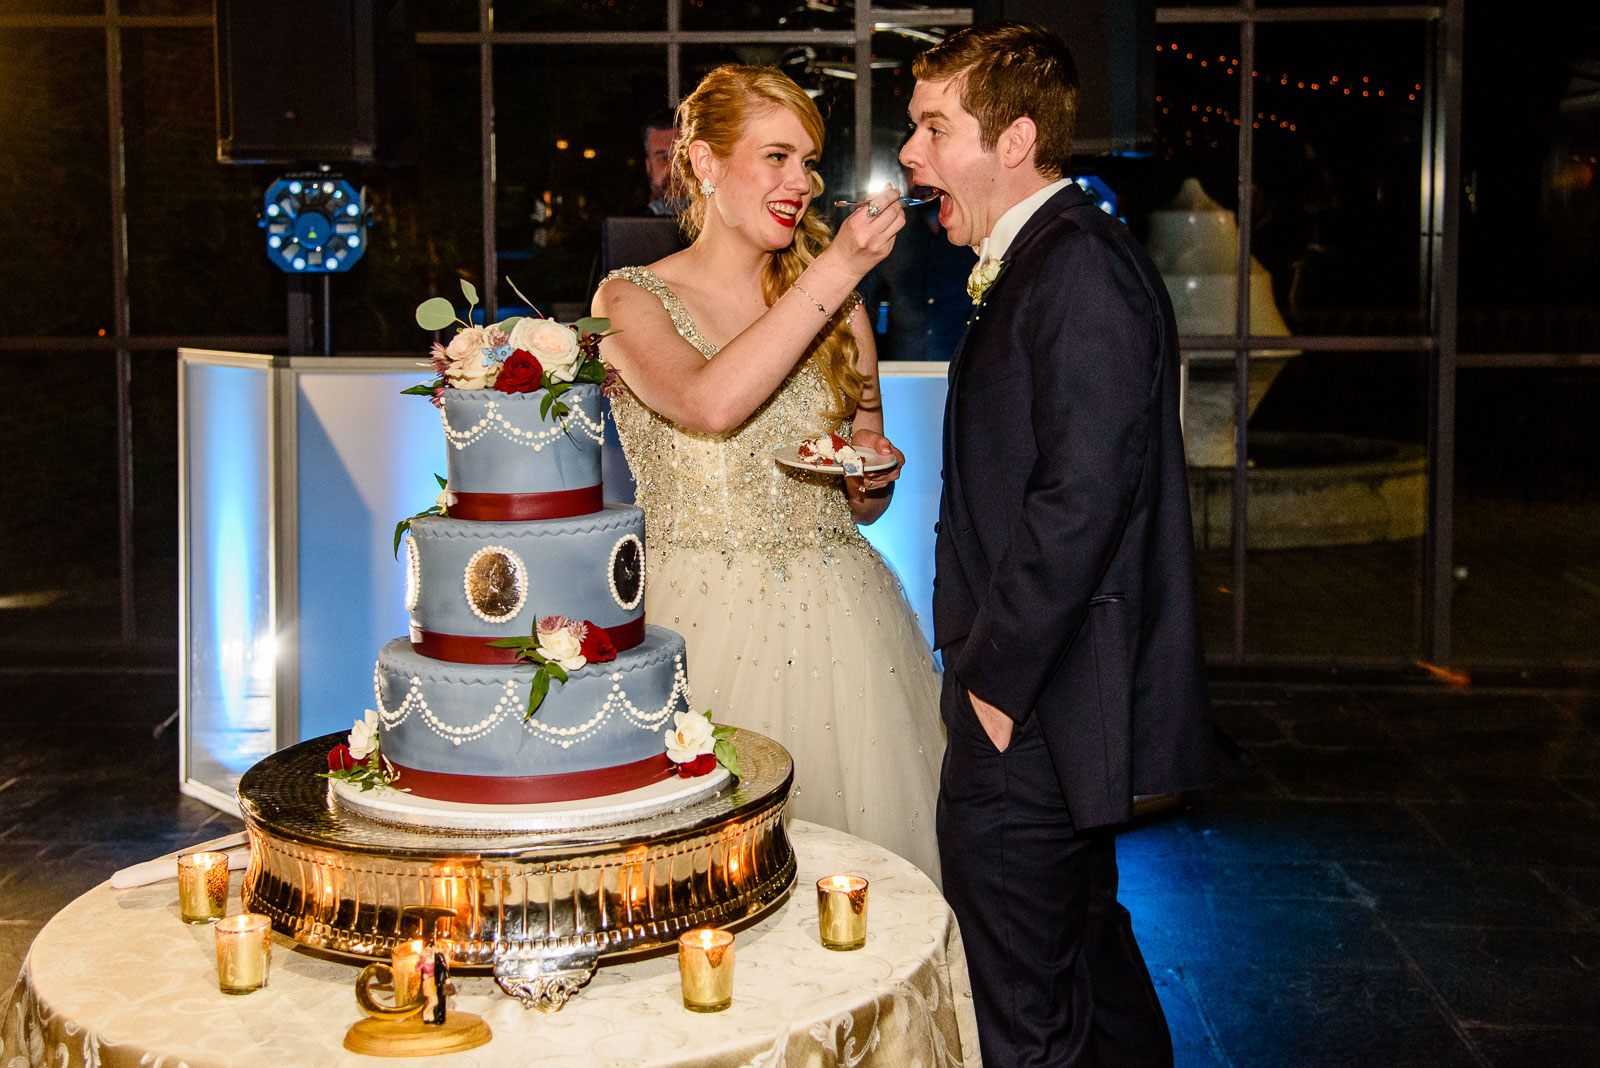 NYIT de Seversky Mansion Wedding cake cutting